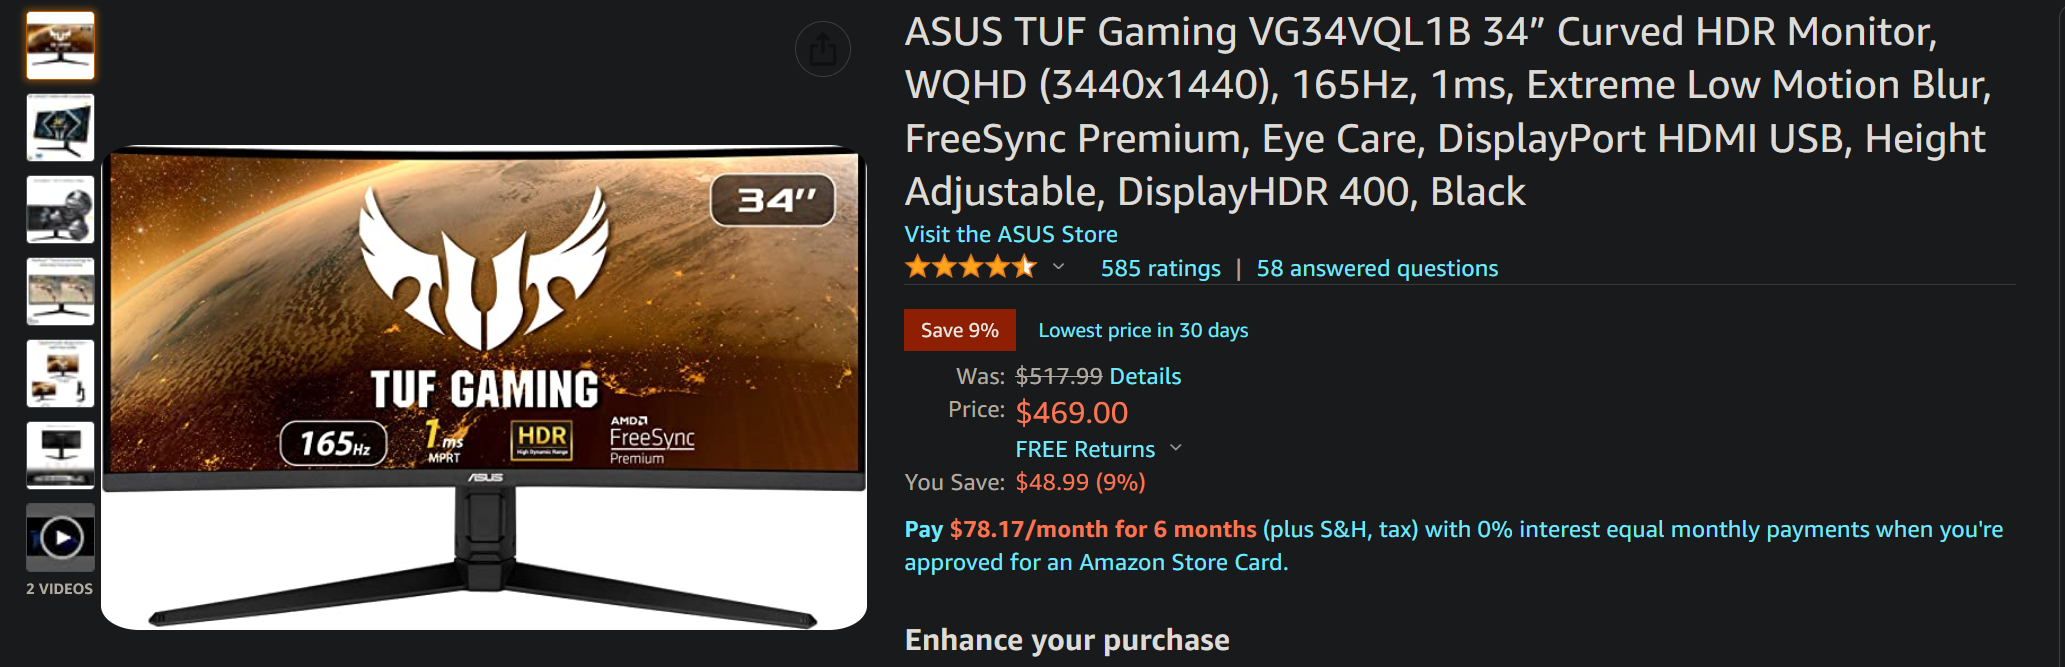 ASUS TUF Gaming VG34VQL1B 34” Curved HDR Monitor, WQHD $469 Amazon